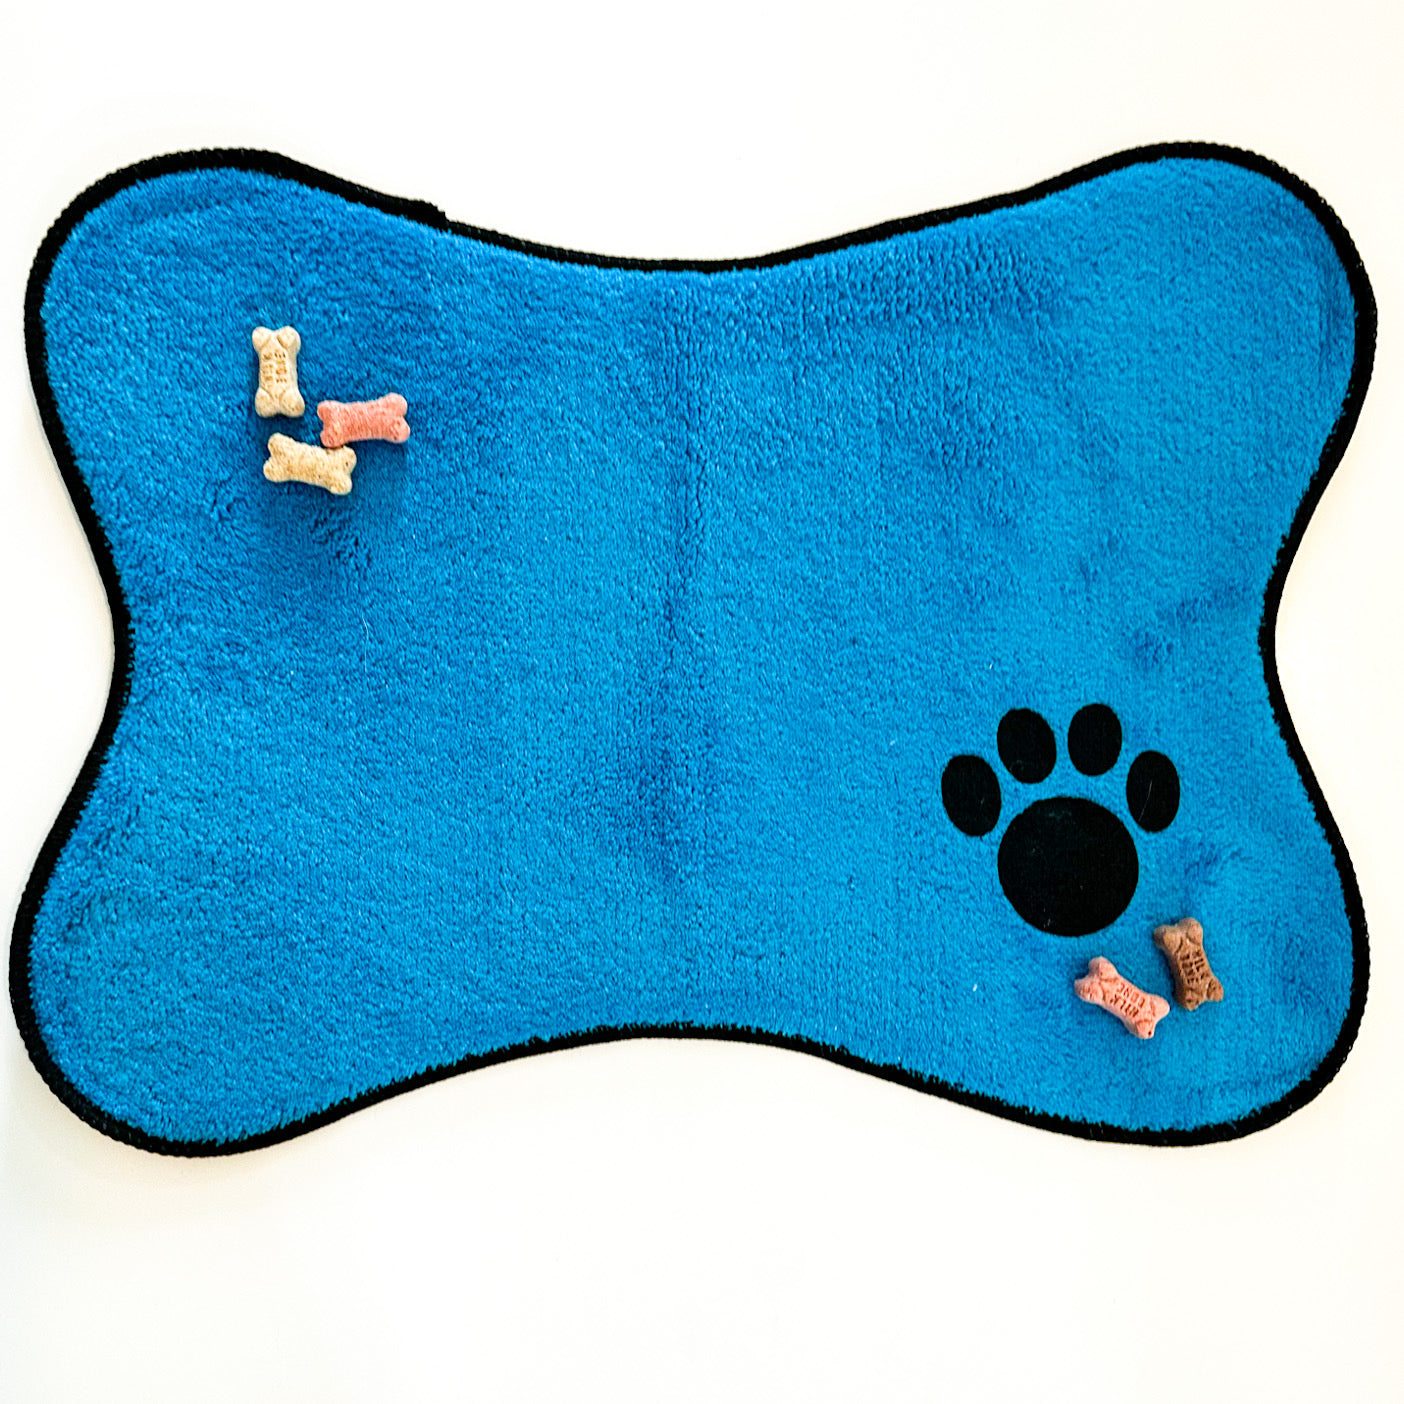 Bone Shape Feeding Mat Buffalo Plaid Blue And Black, Mat For Dog Bowls –  Puppana